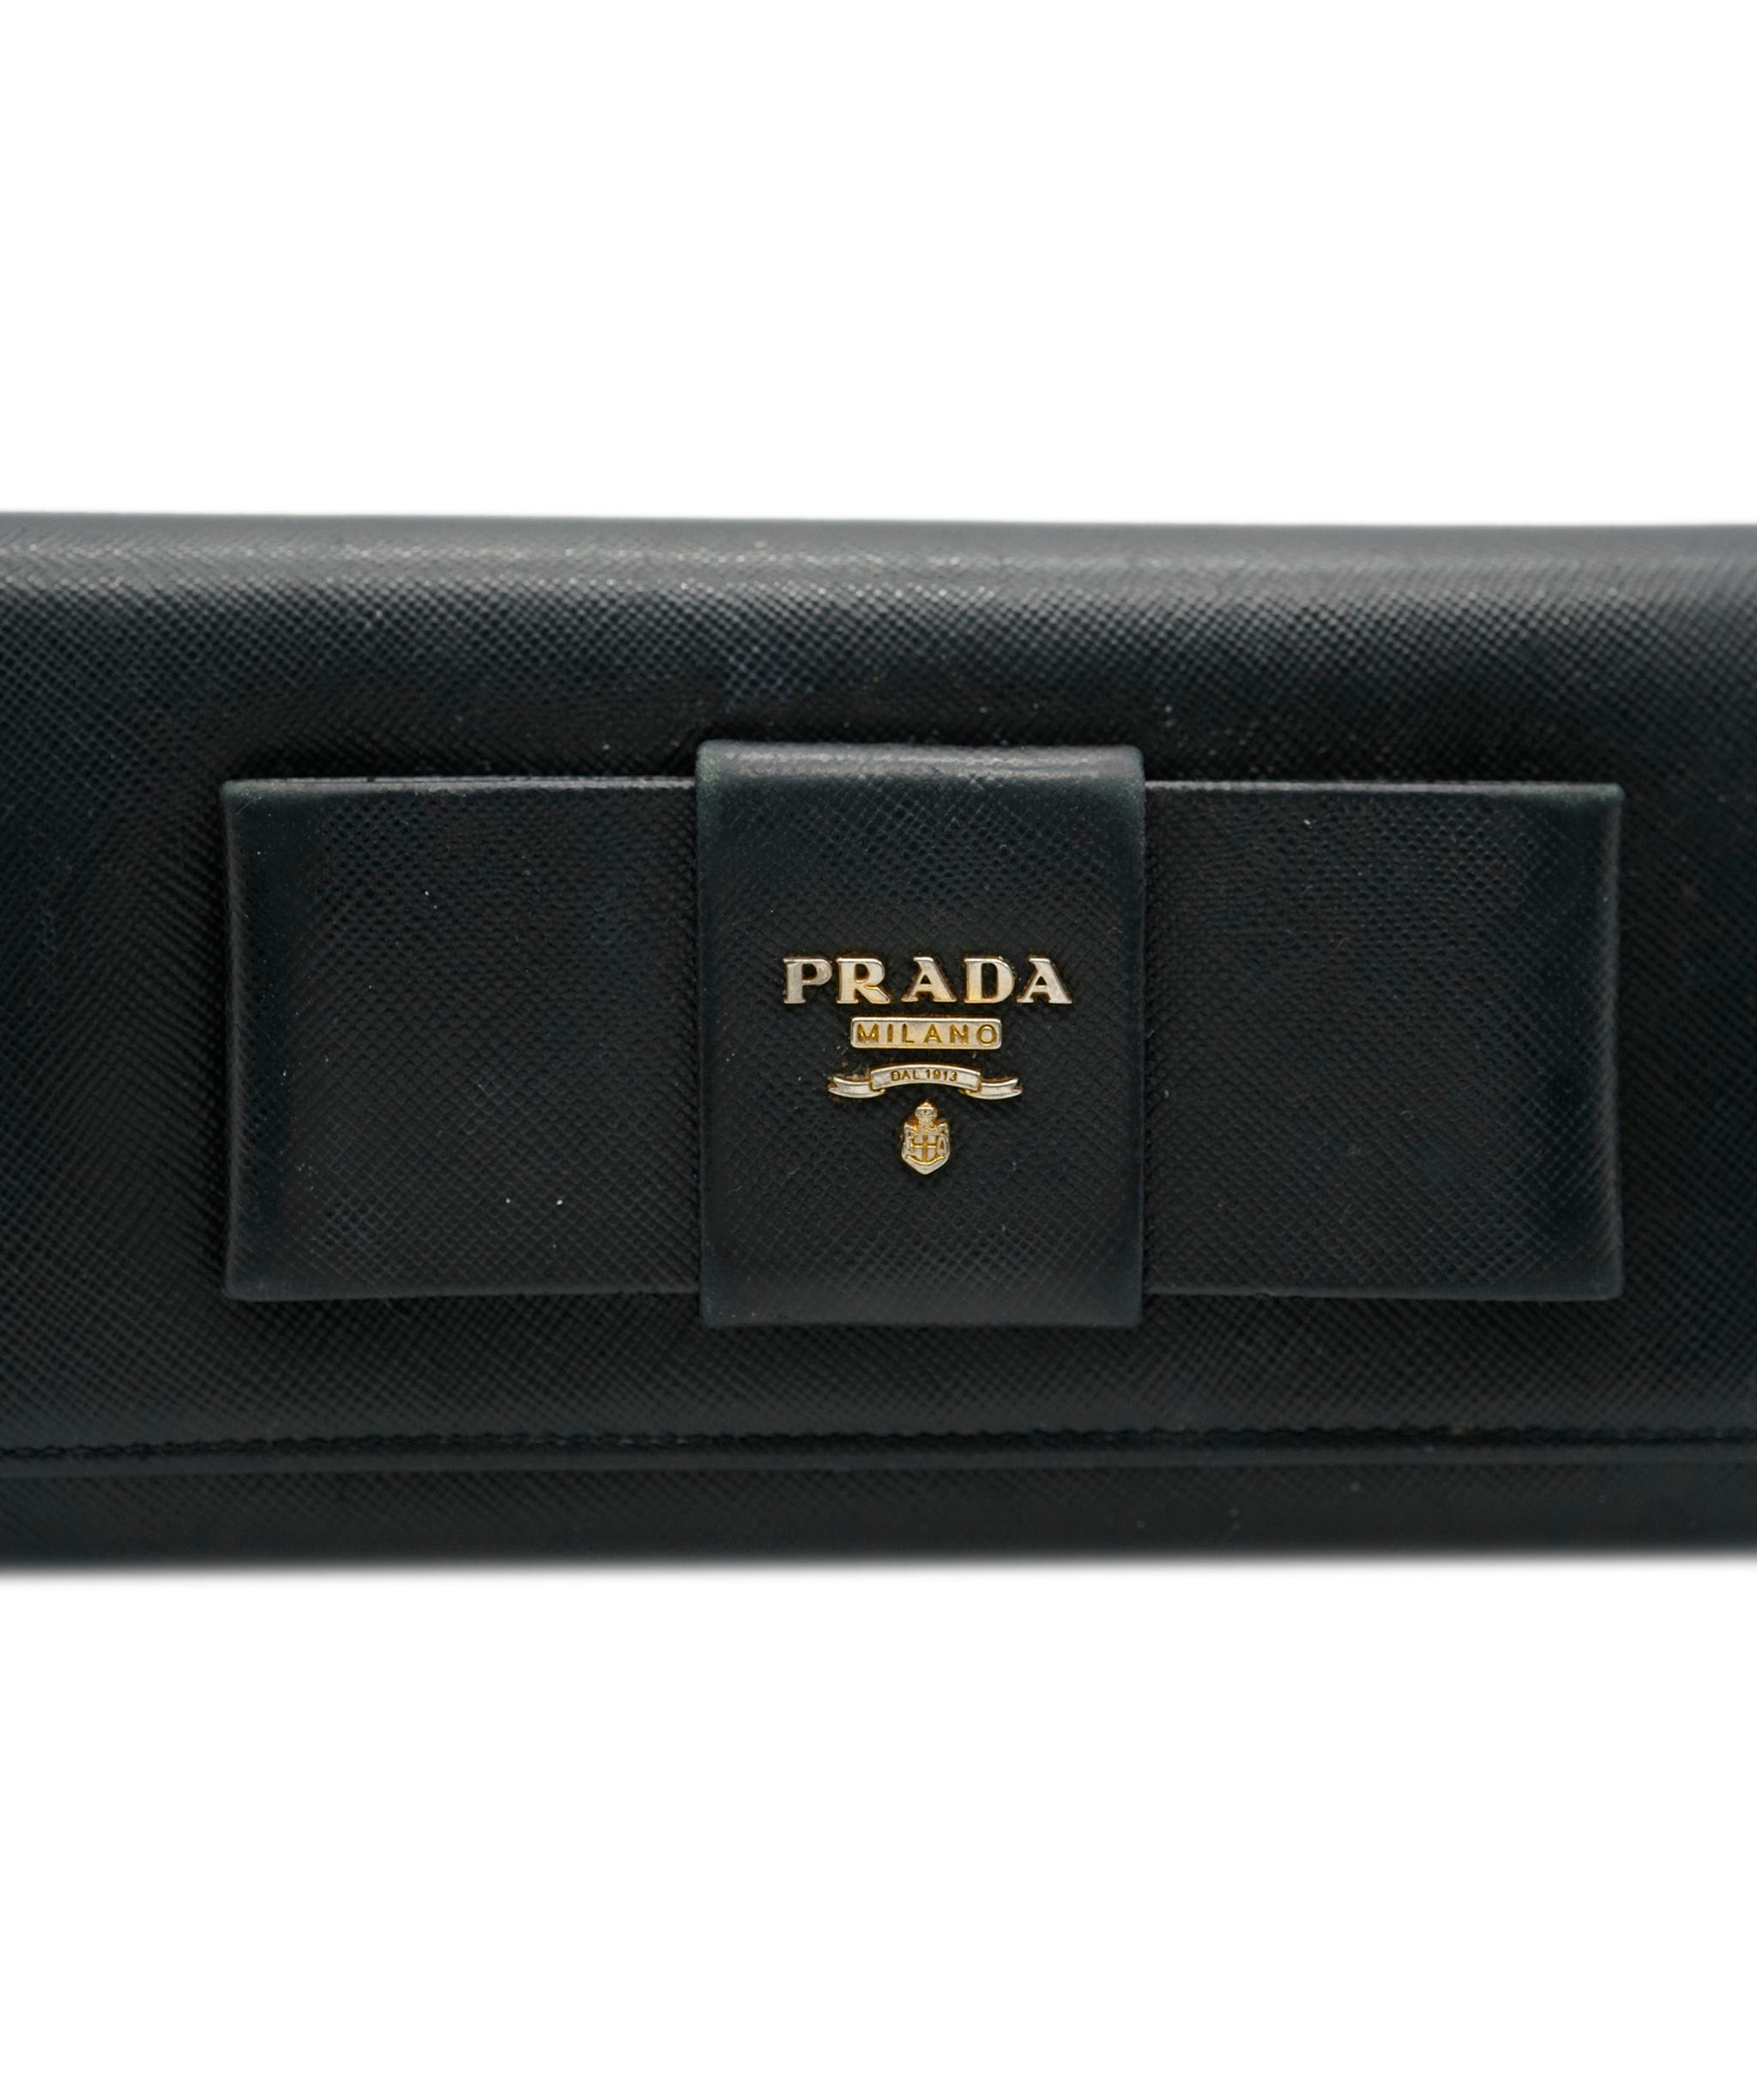 Prada Prada Black Wallet  ALC0962